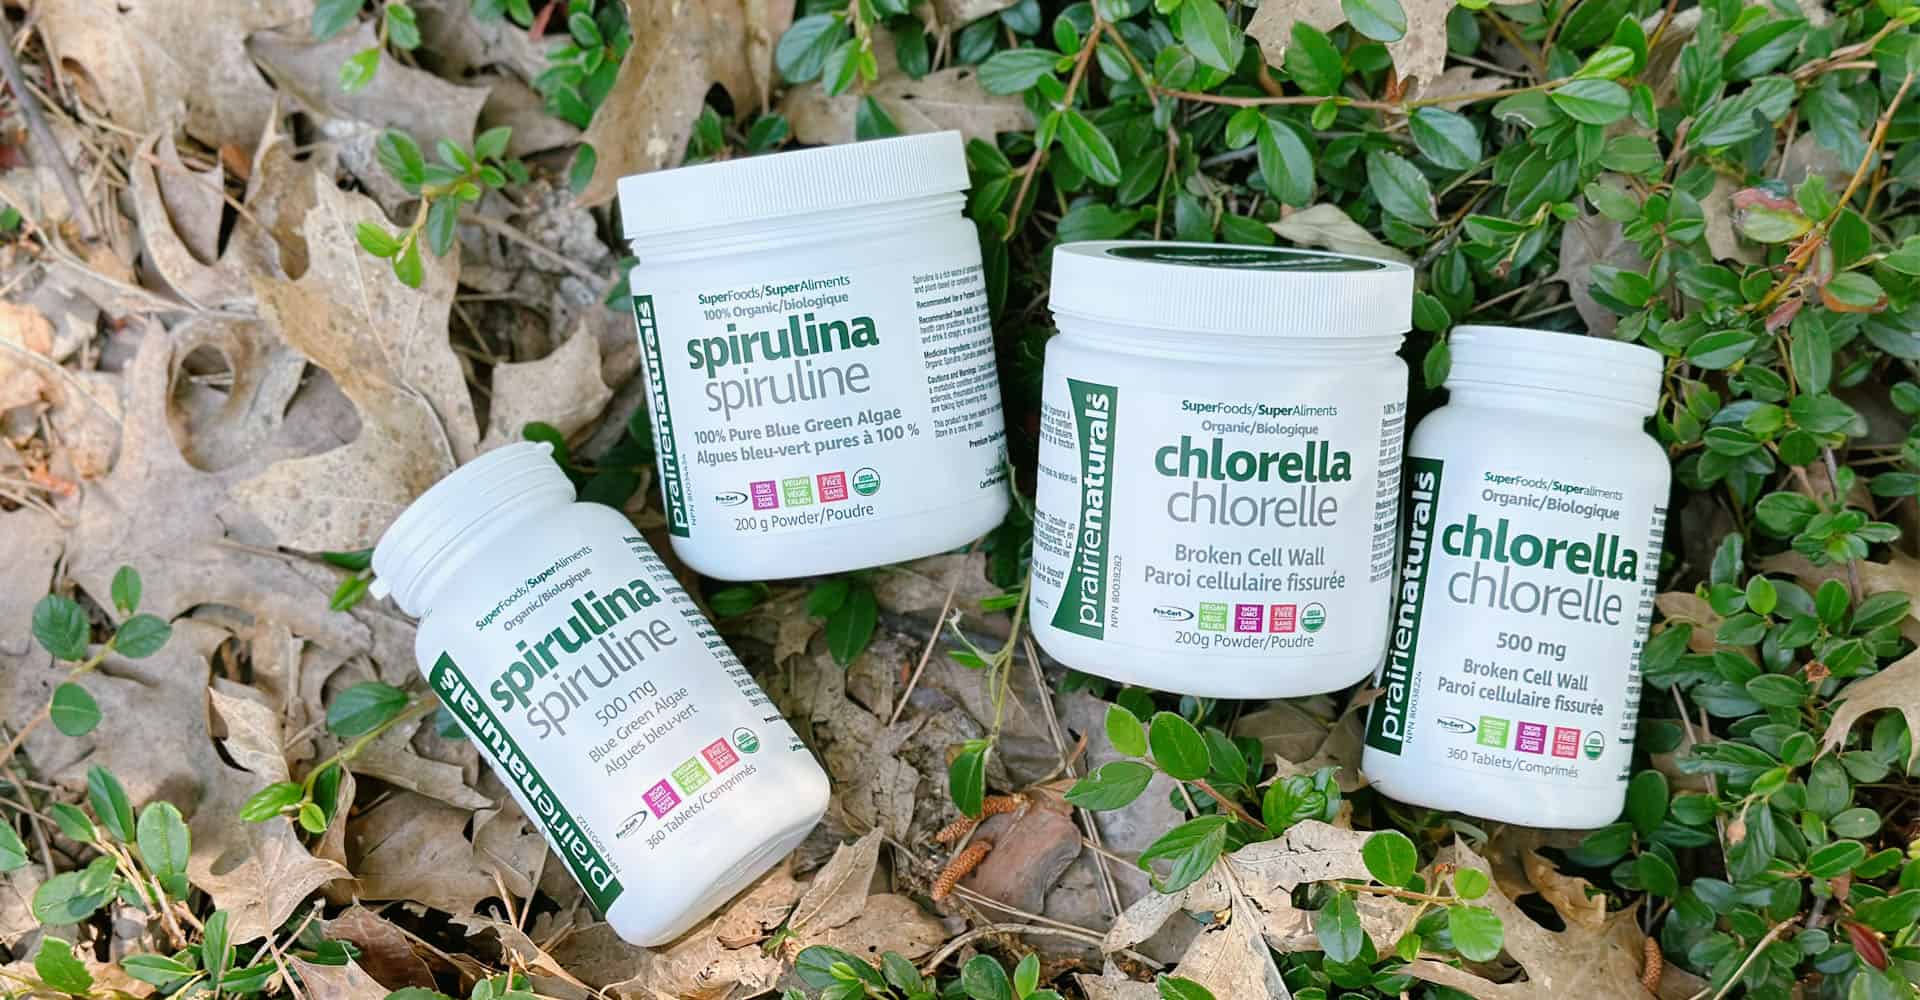 Featured image for “Organic Spirulina vs Organic Chlorella”